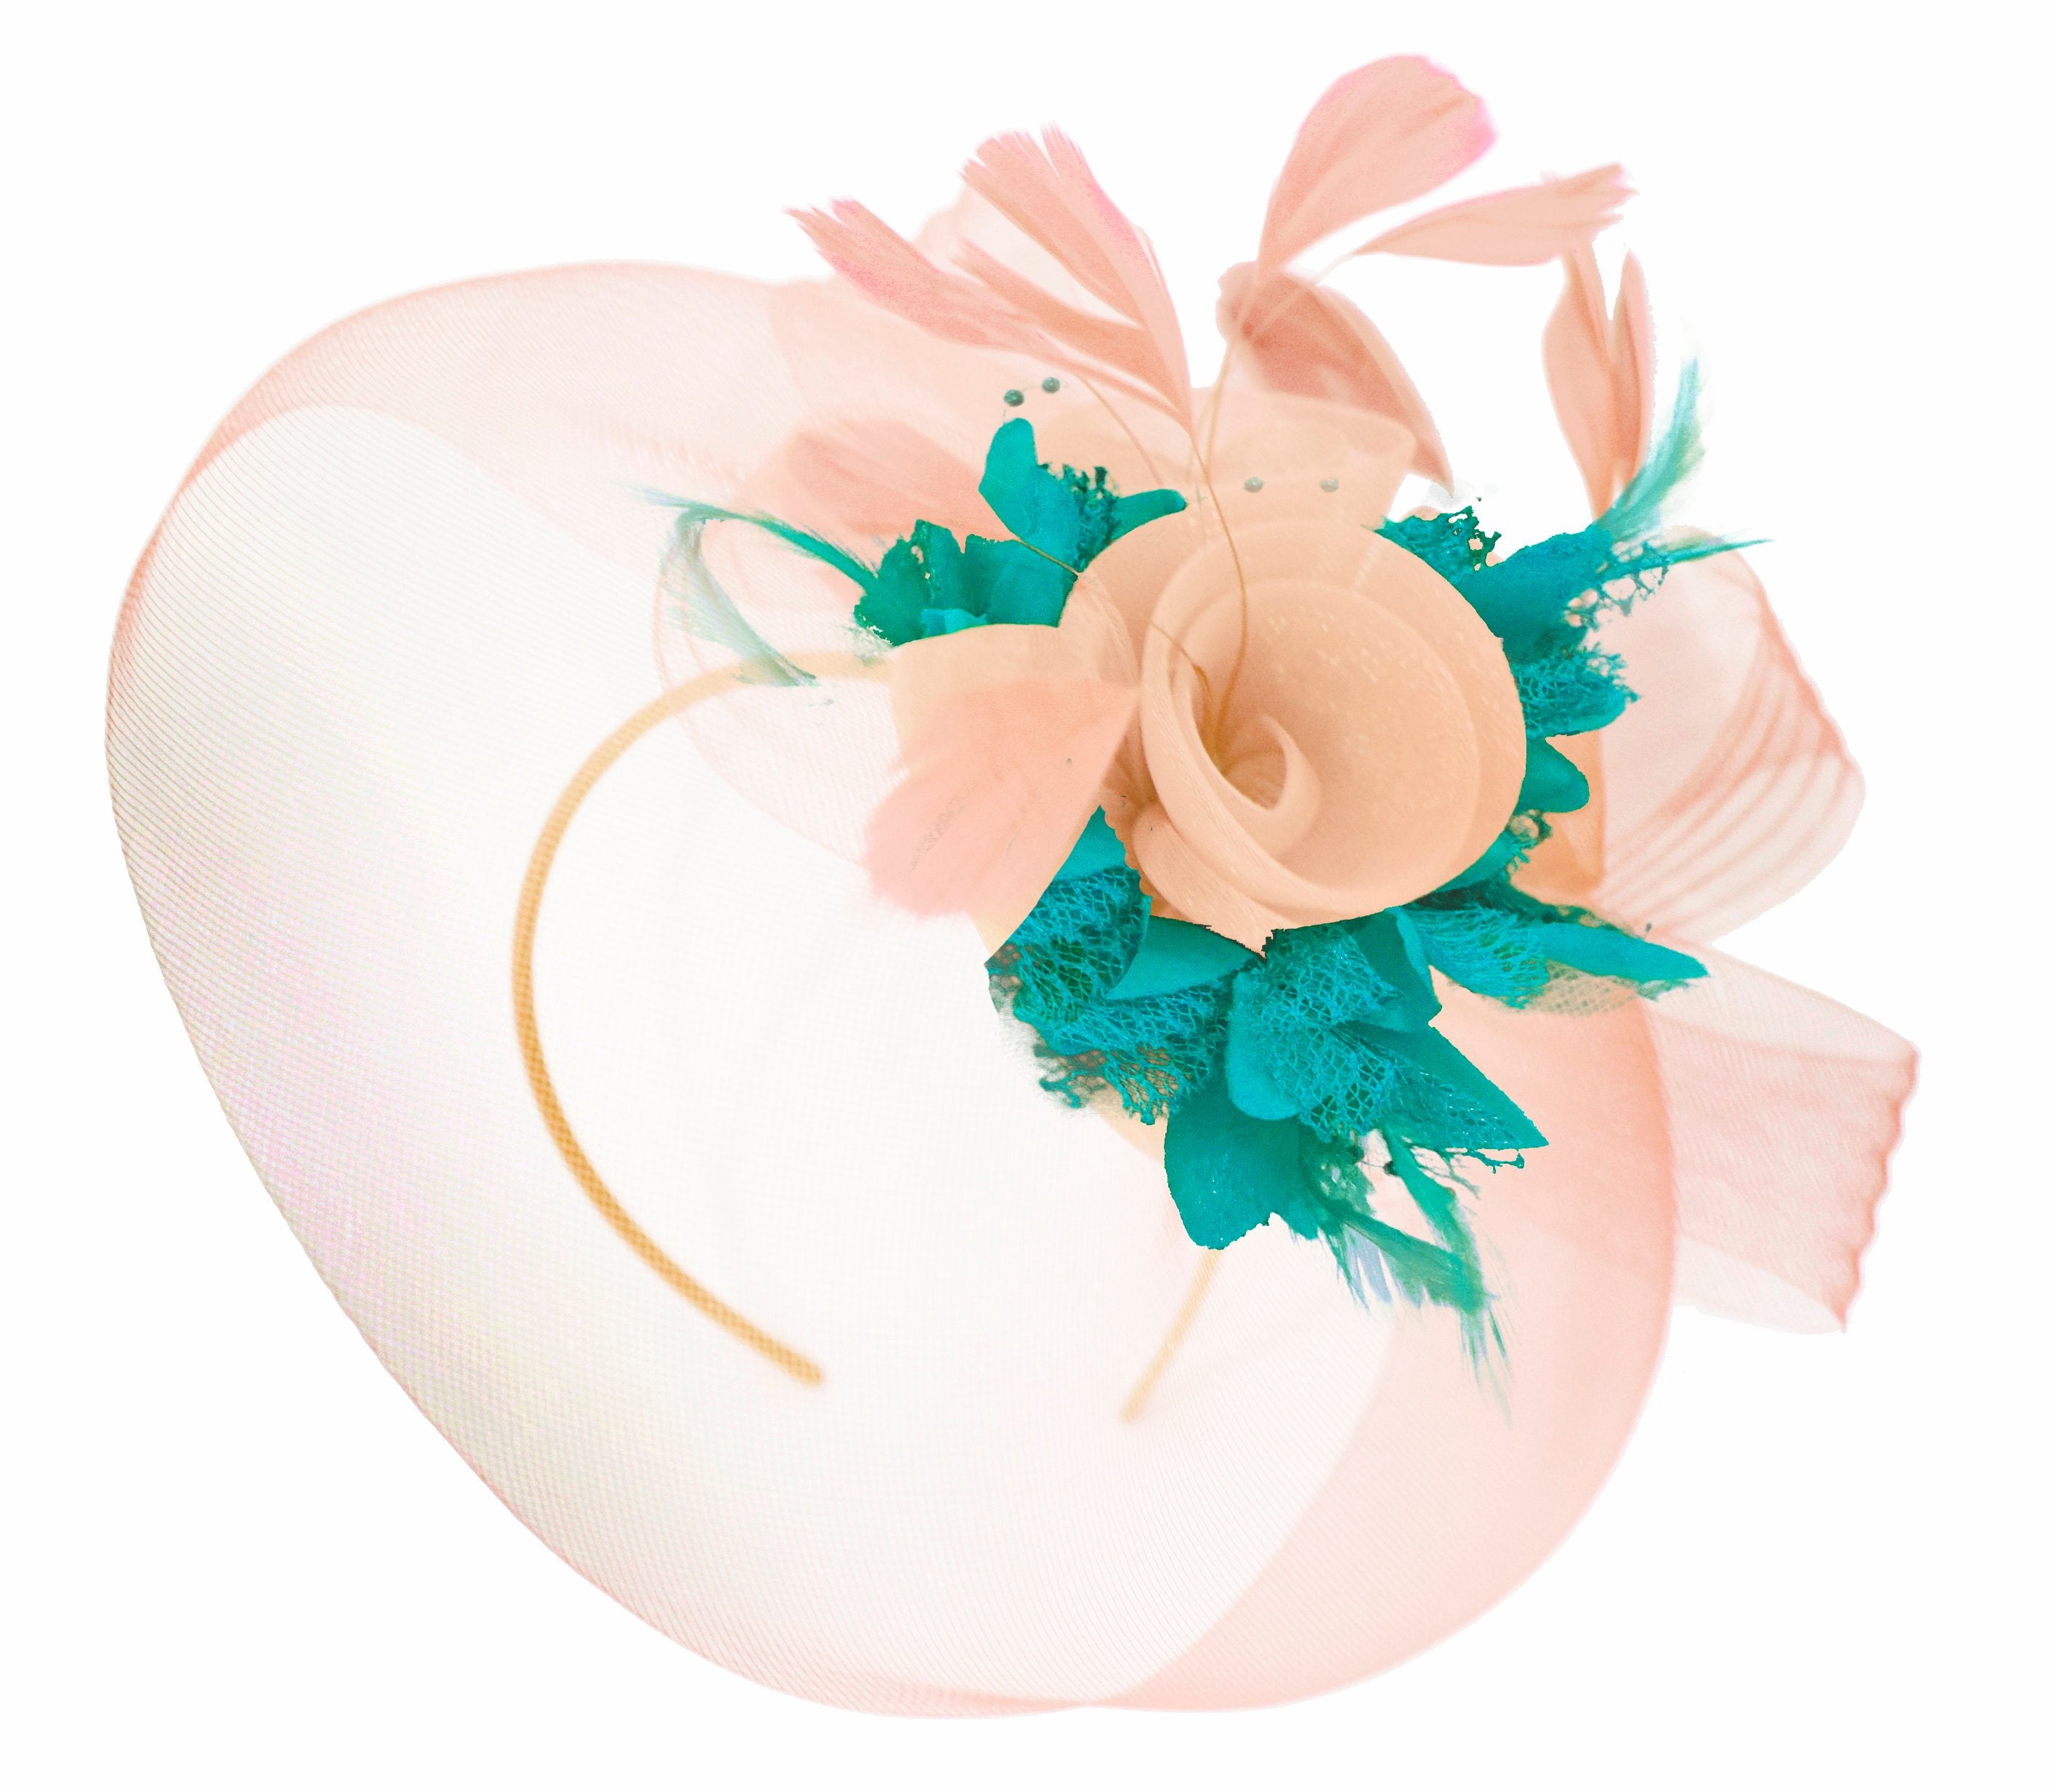 Caprilite Nude Pink Peach and Teal Green Fascinator Hat Veil Net Hair Clip Ascot Derby Races Wedding Headband Feather Flower